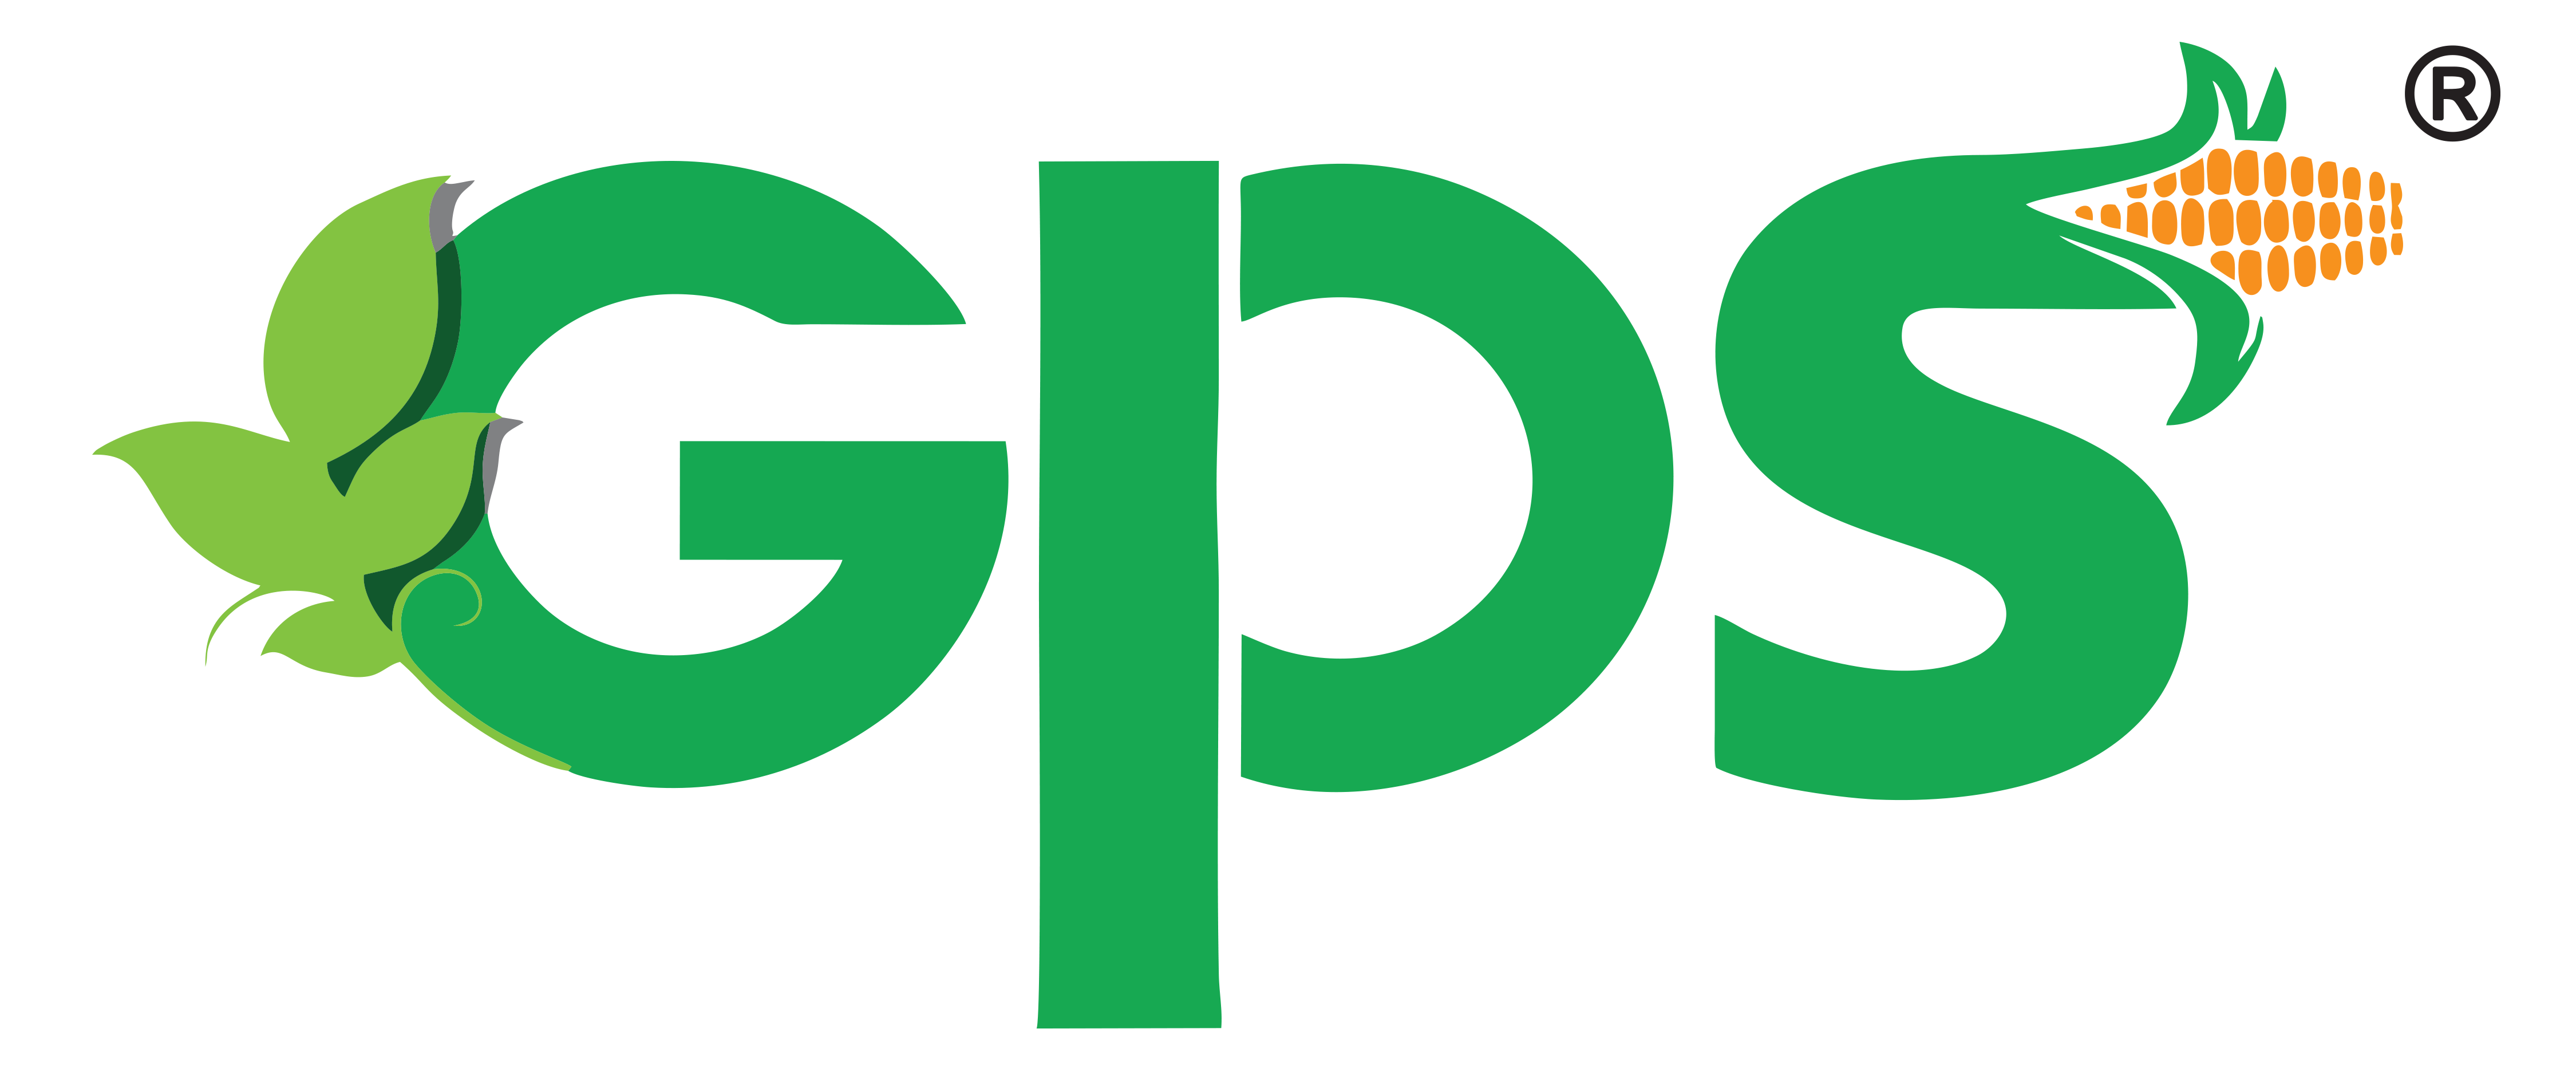 gps logo